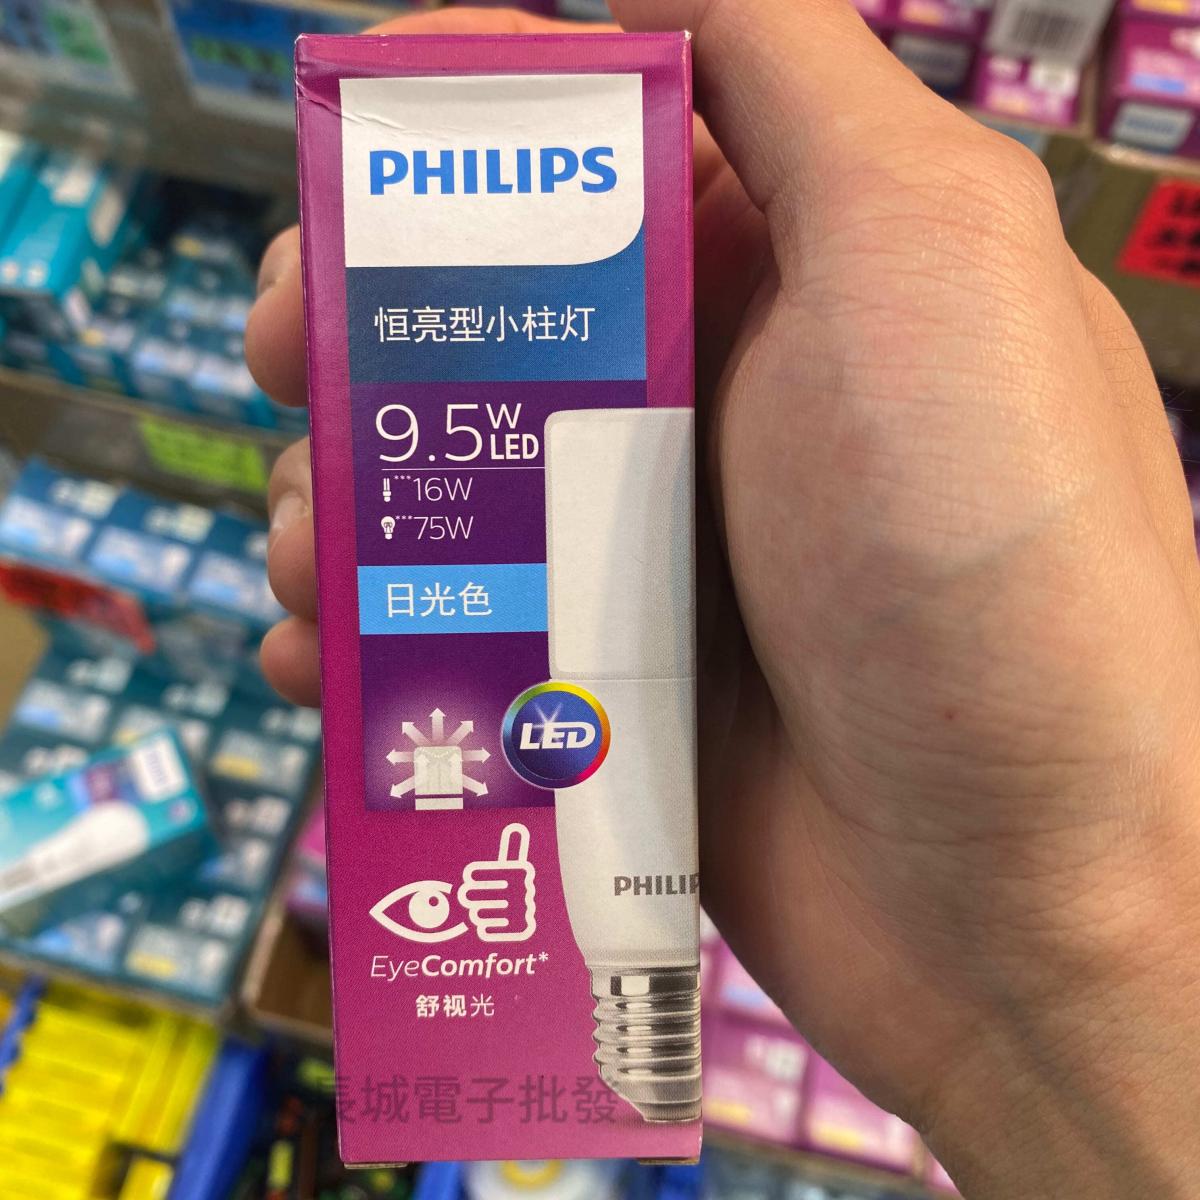 Philips Eyecomfort 飛利浦 【柱形 9.5W 白光 E27大螺丝头】 舒視光技術 LED燈泡 燈膽 